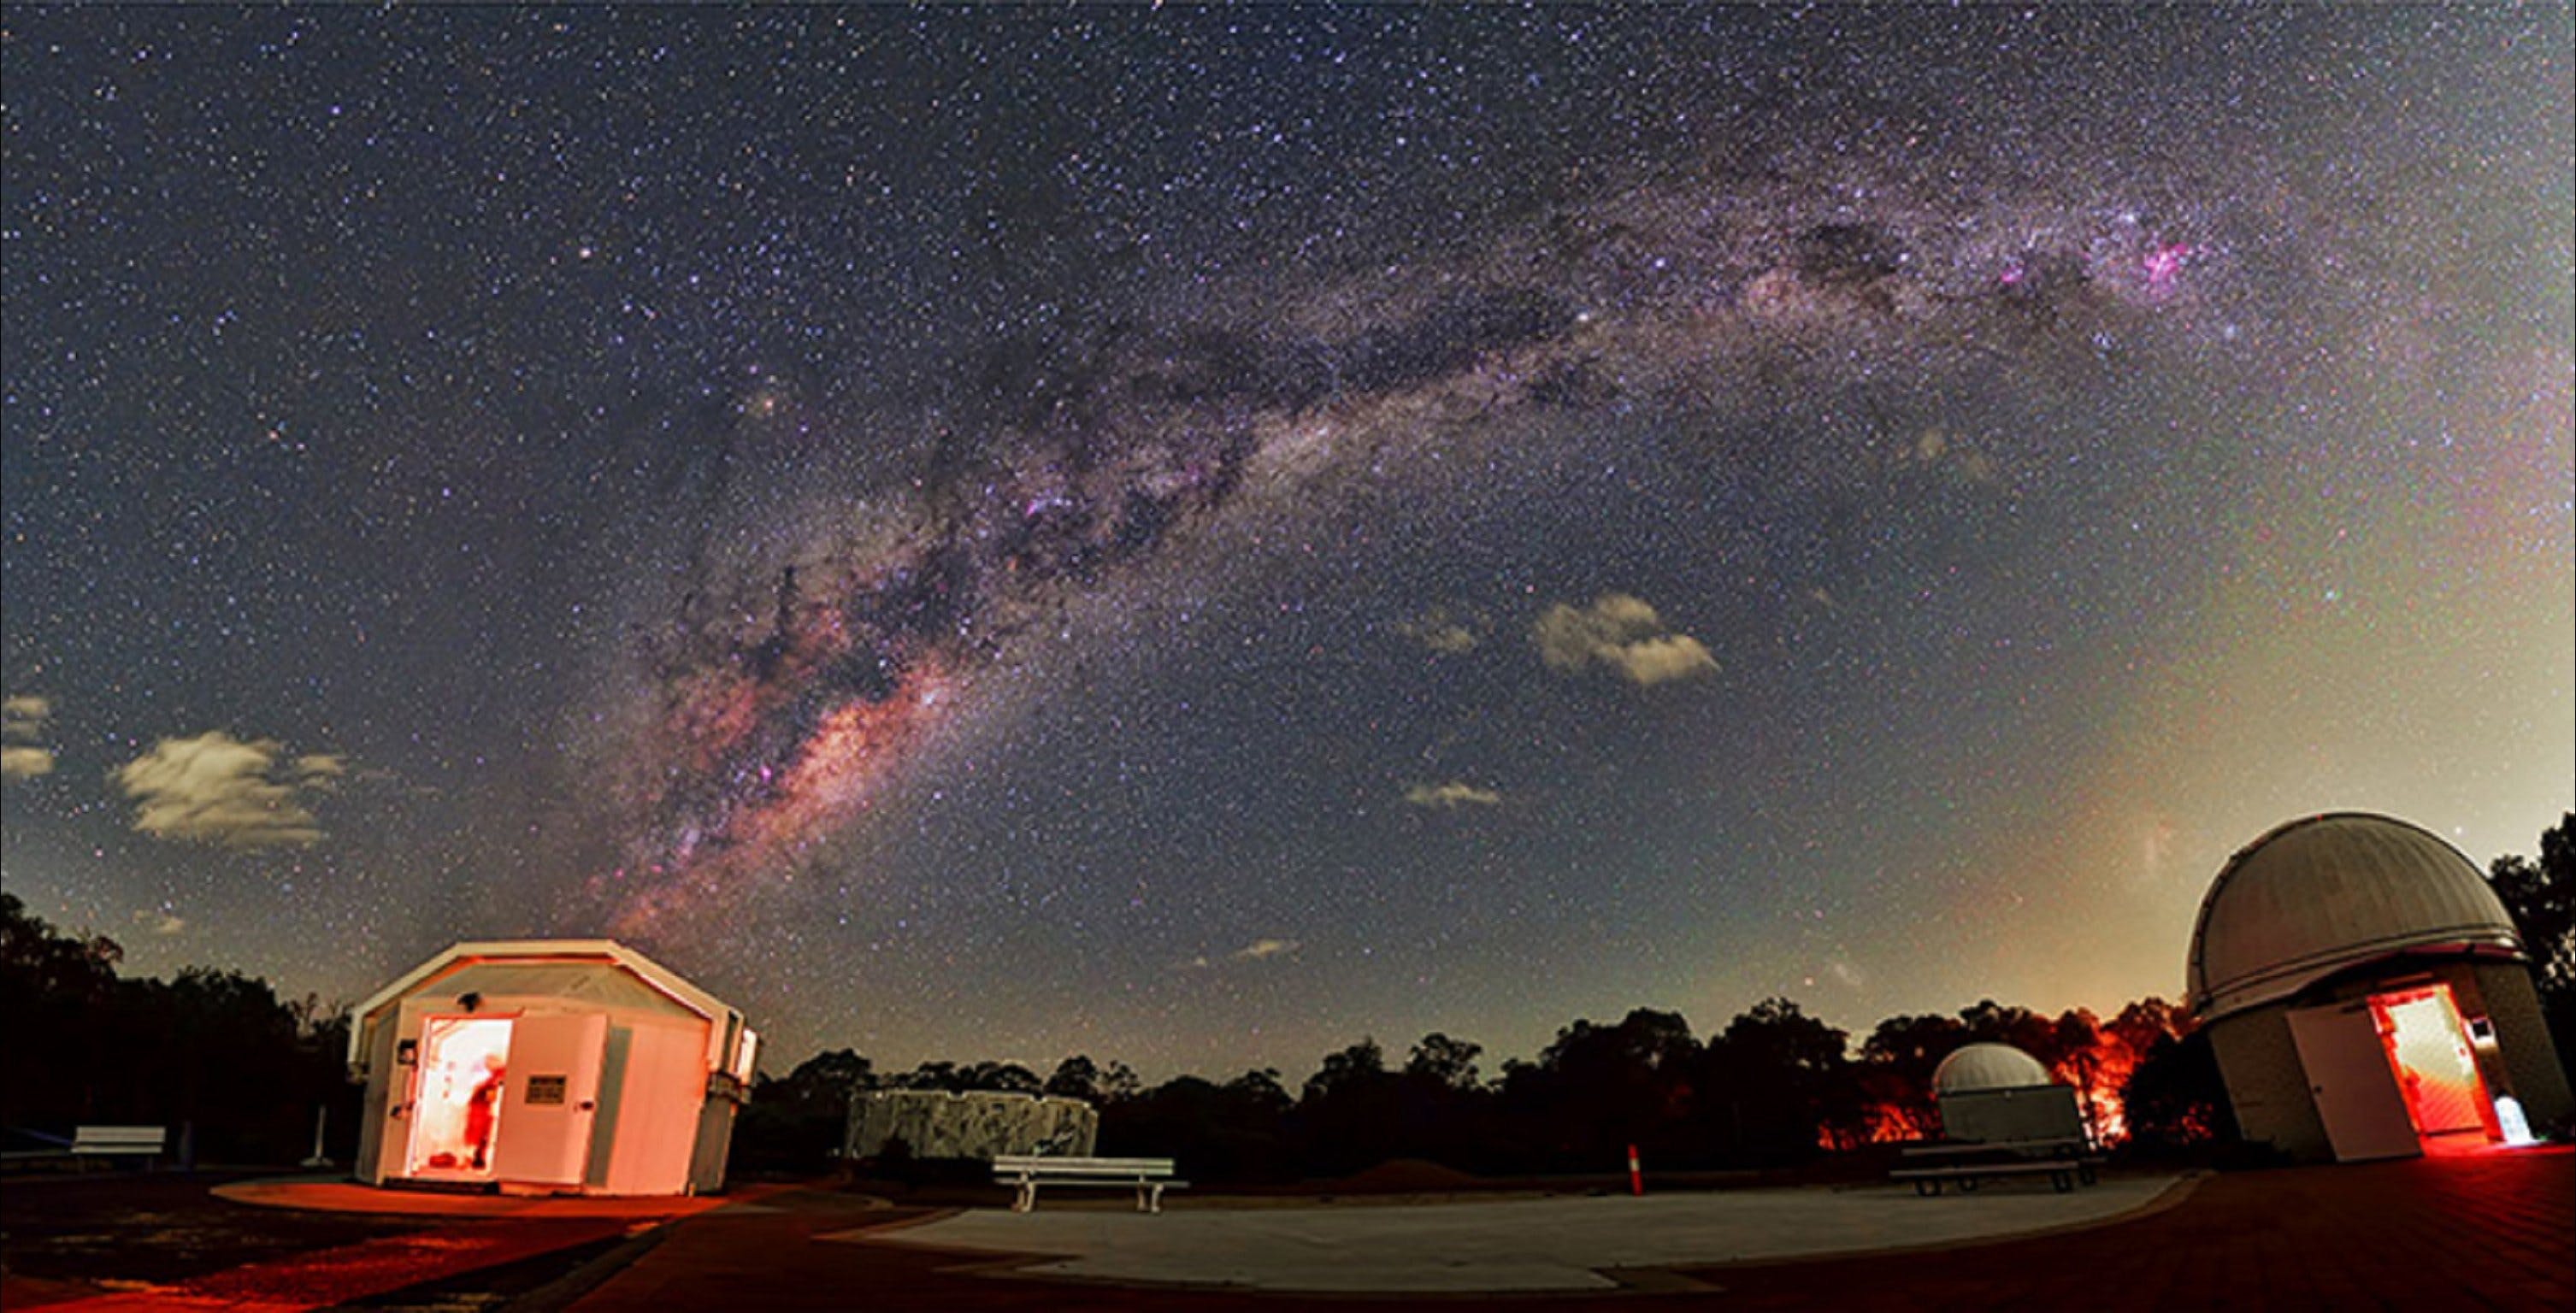 Perth Observatory - Accommodation Port Hedland